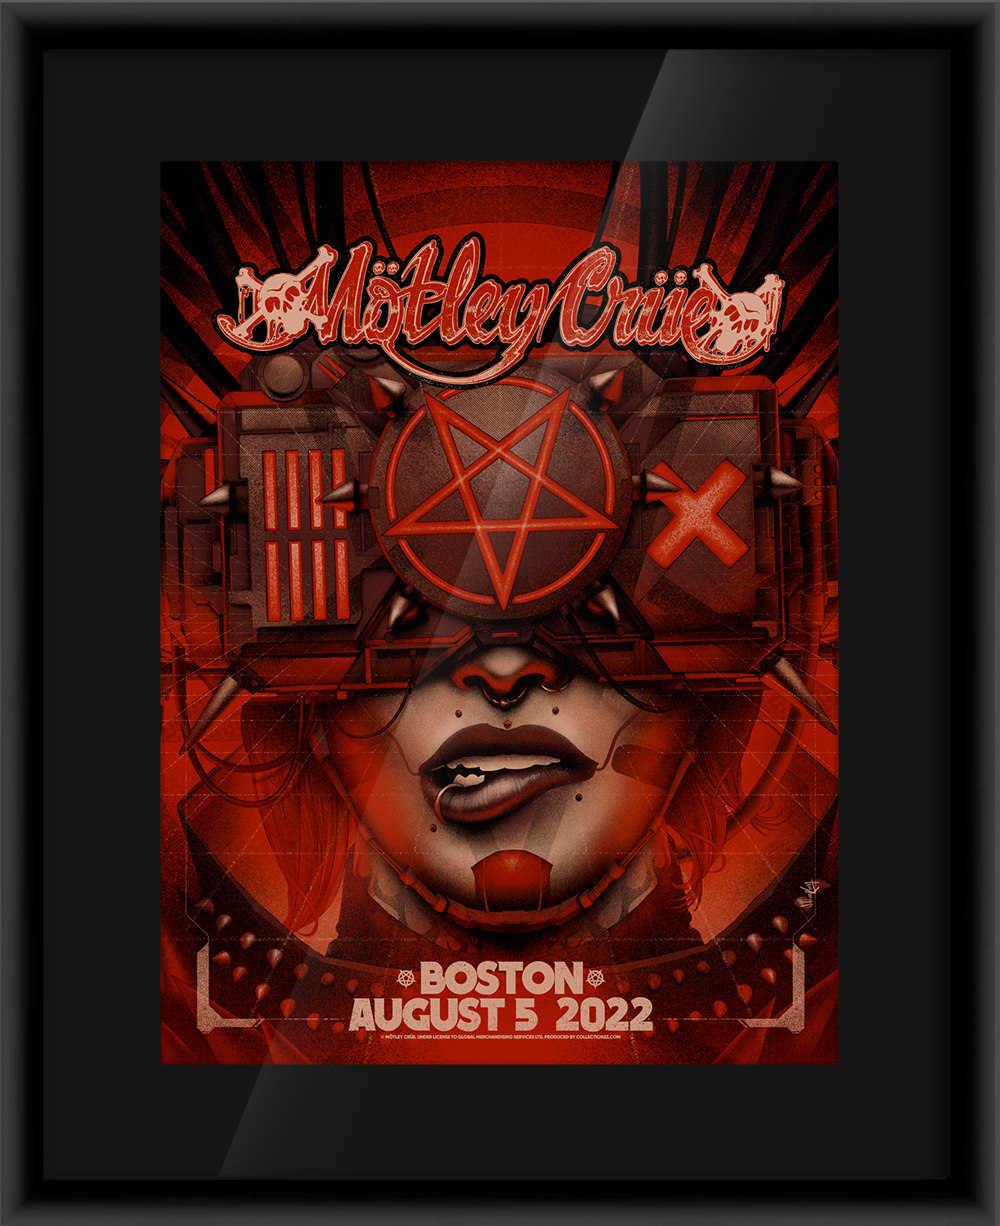 Mötley Crüe Boston August 5, 2022 The Stadium Tour